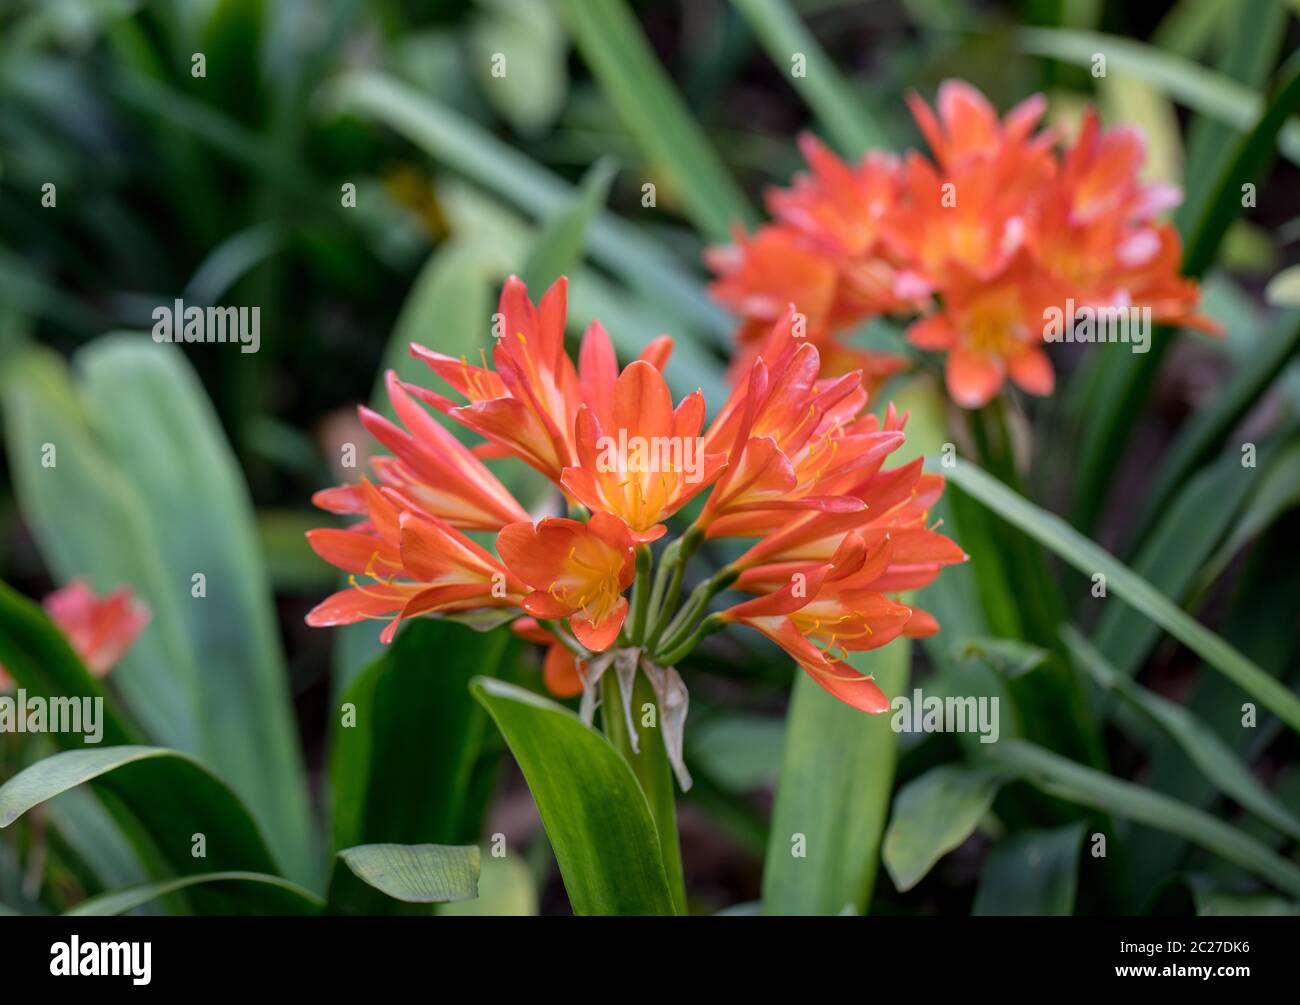 Cluster of orange clivia flowers in garden Stock Photo